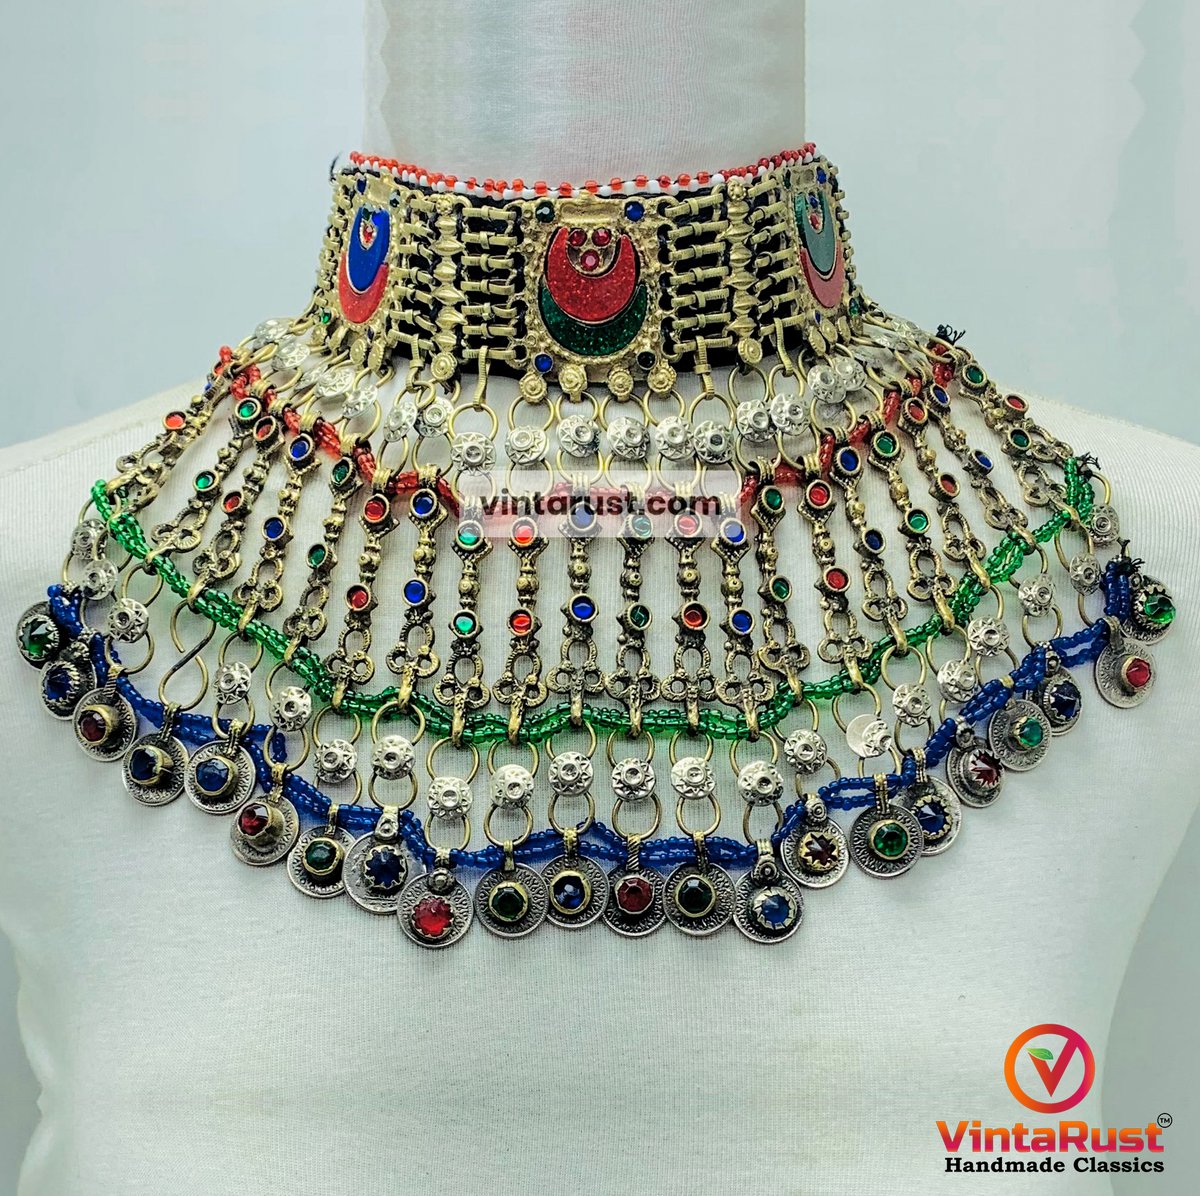 Handmade Bohemian Multicolor Choker Necklace. 

Shop Now:
buff.ly/3LyIJvh

#vintarust #handmadejewelry #bohemianstyle #multicolornecklace #expressyourself #uniquecraftsmanship #vibrantelegance #artistry #adornyourself #colorfulbeauty #jewelrylovers #fashionstatement